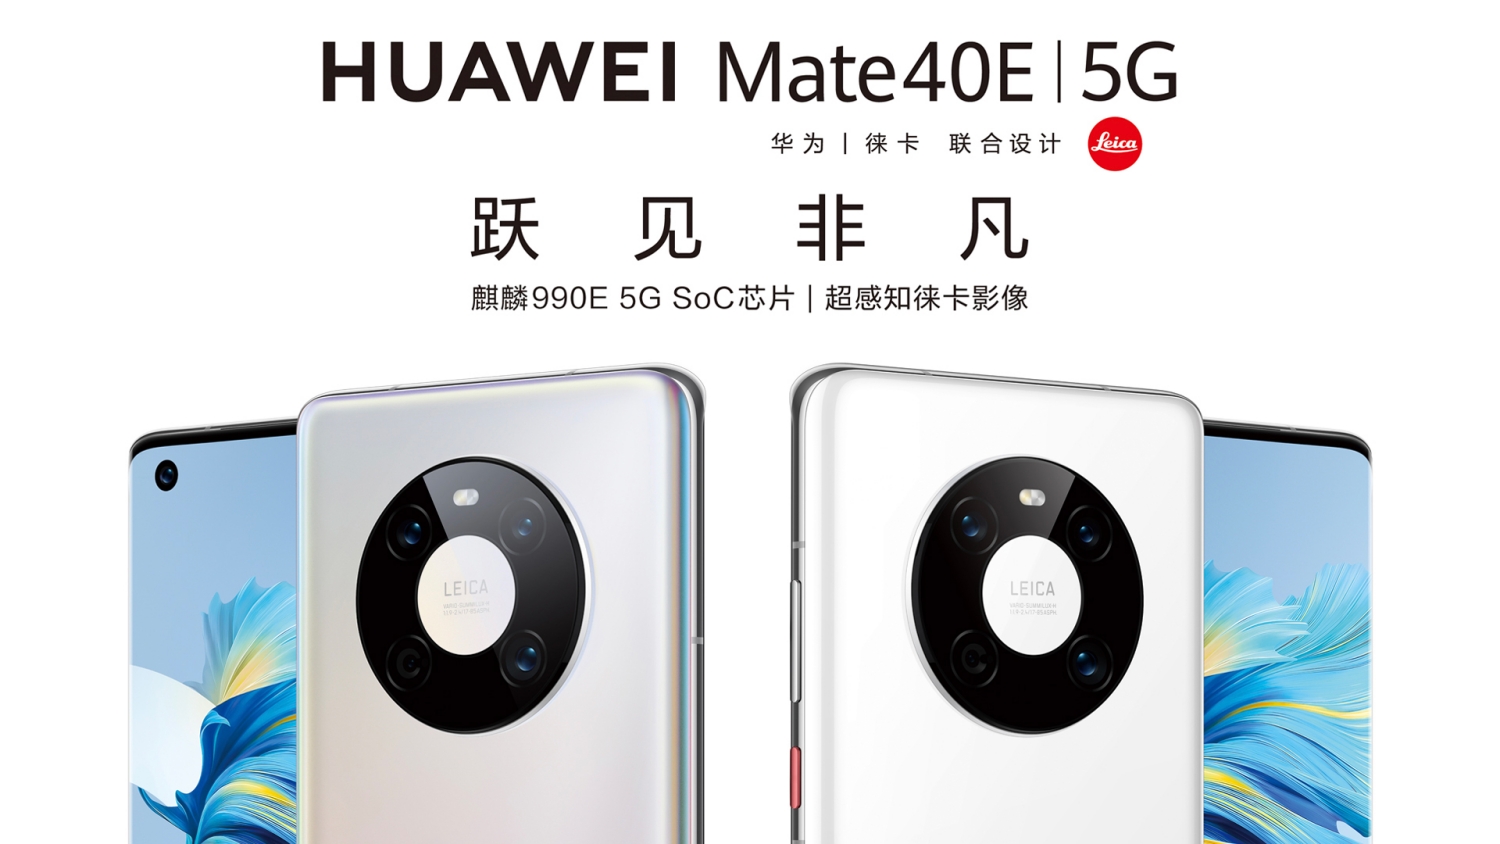 Huawei Mate 40E 5G Hadir Dengan Cip Kirin 990E, Skrin 90Hz Dan Kamera Utama 64MP